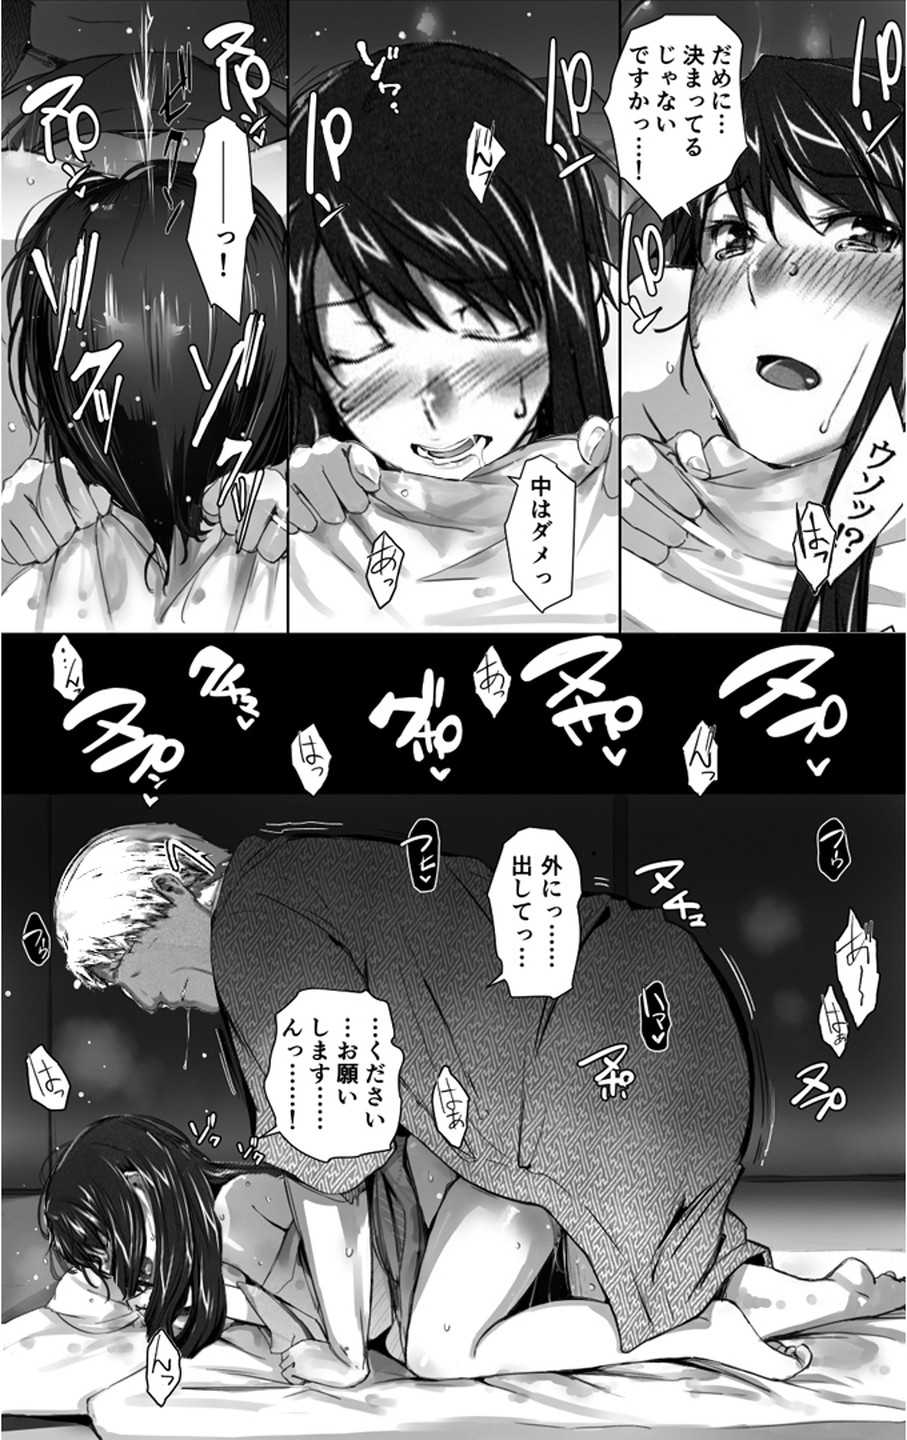 Sakiko-san in delusion Vol.1 Ver.1.1 ~Sakiko-san's circumstance at an educational training~ Stupid Sakiko (collage) on-going - Page 14